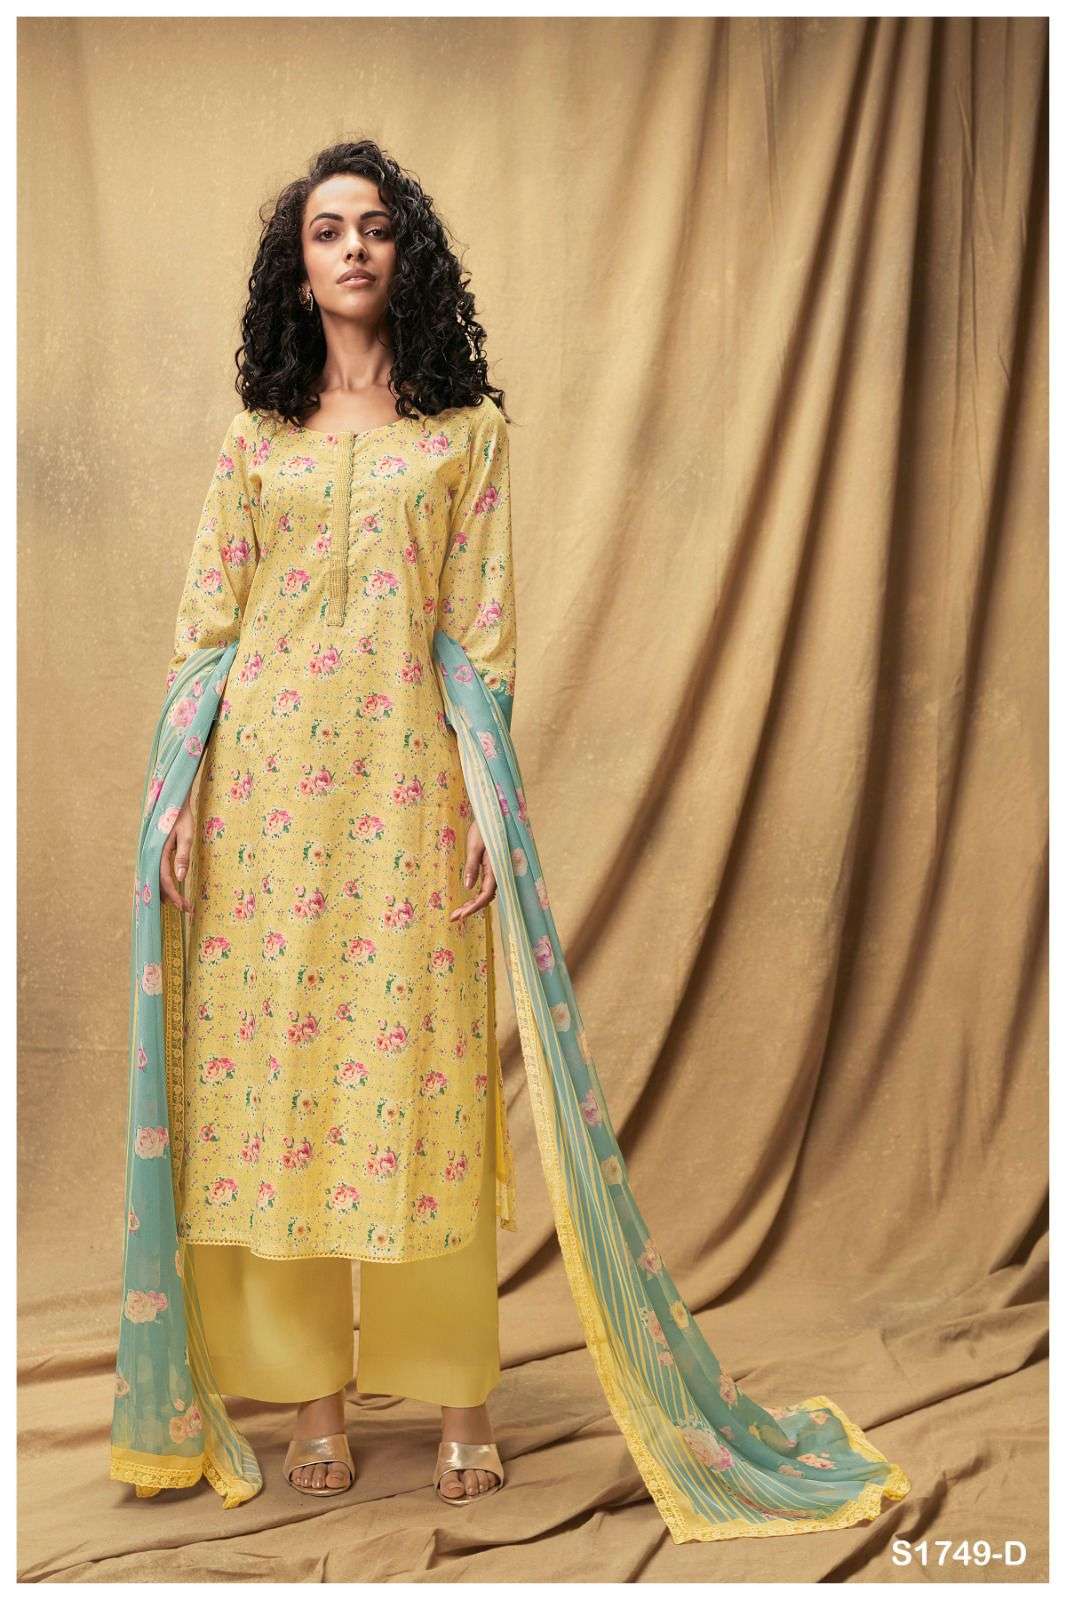 ganga pillai 1749 series premium cotton designer salwar suits catalogue online wholesaler surat